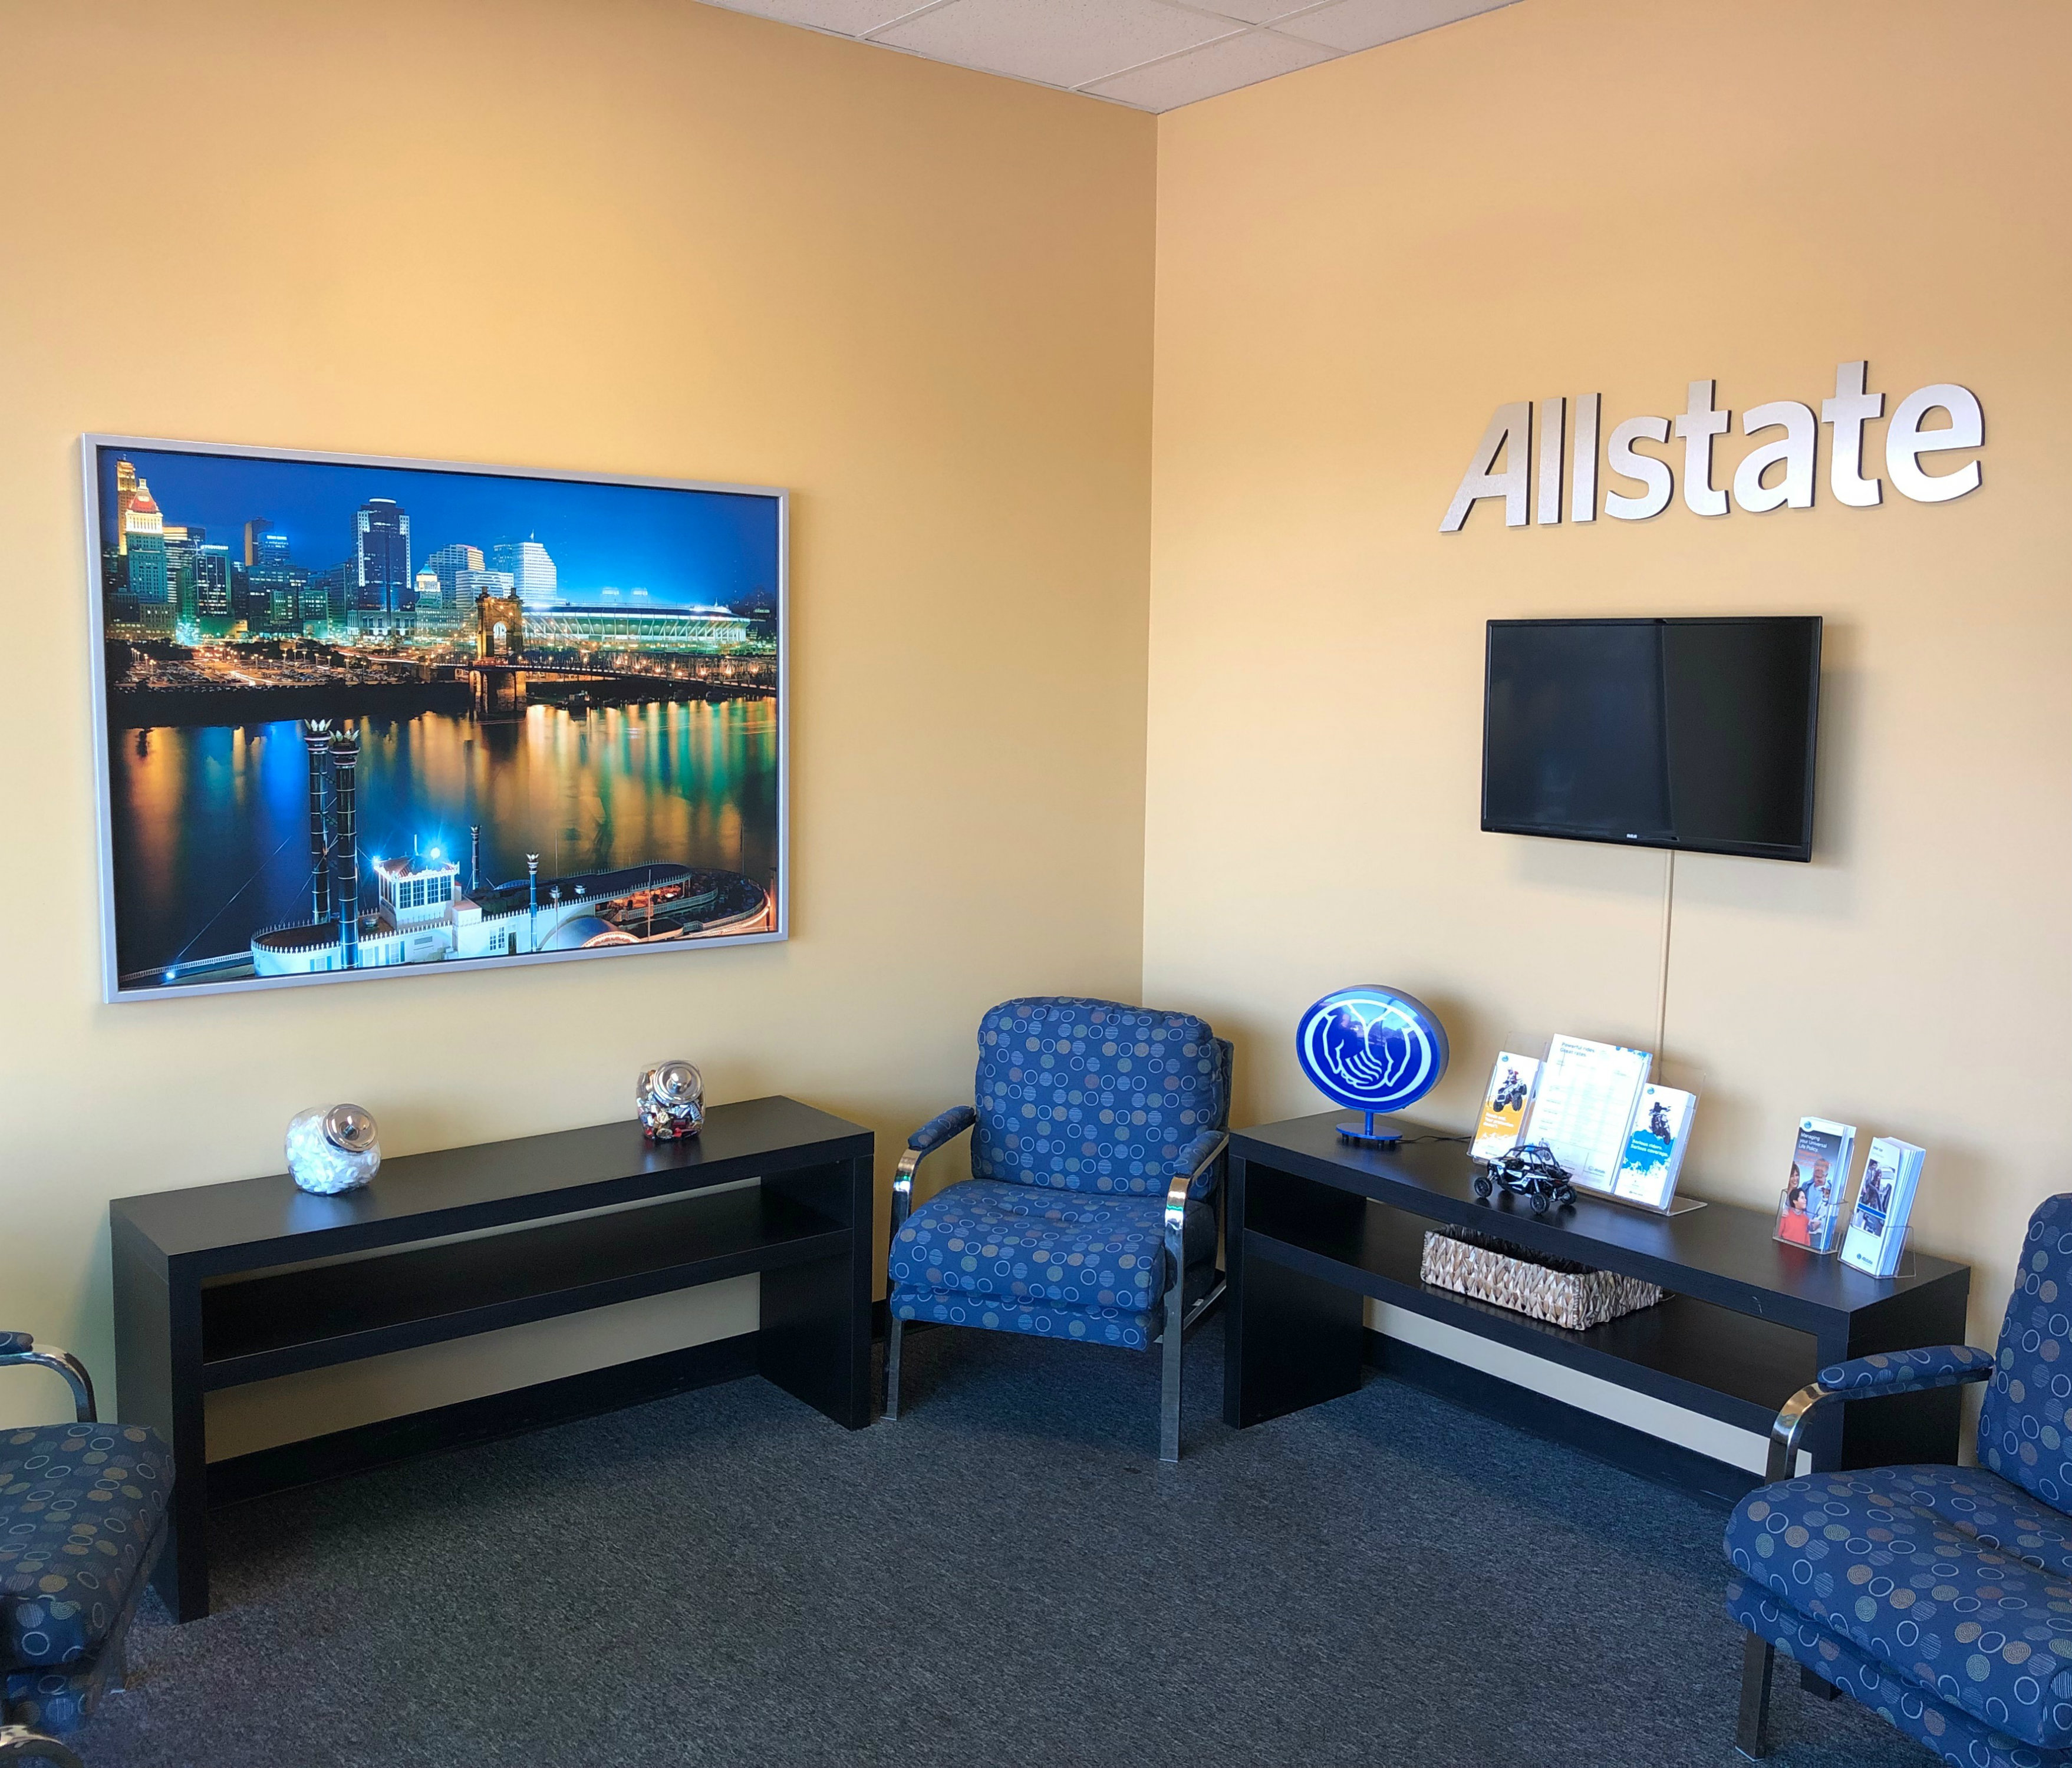 Monaghan & Associates: Allstate Insurance Photo